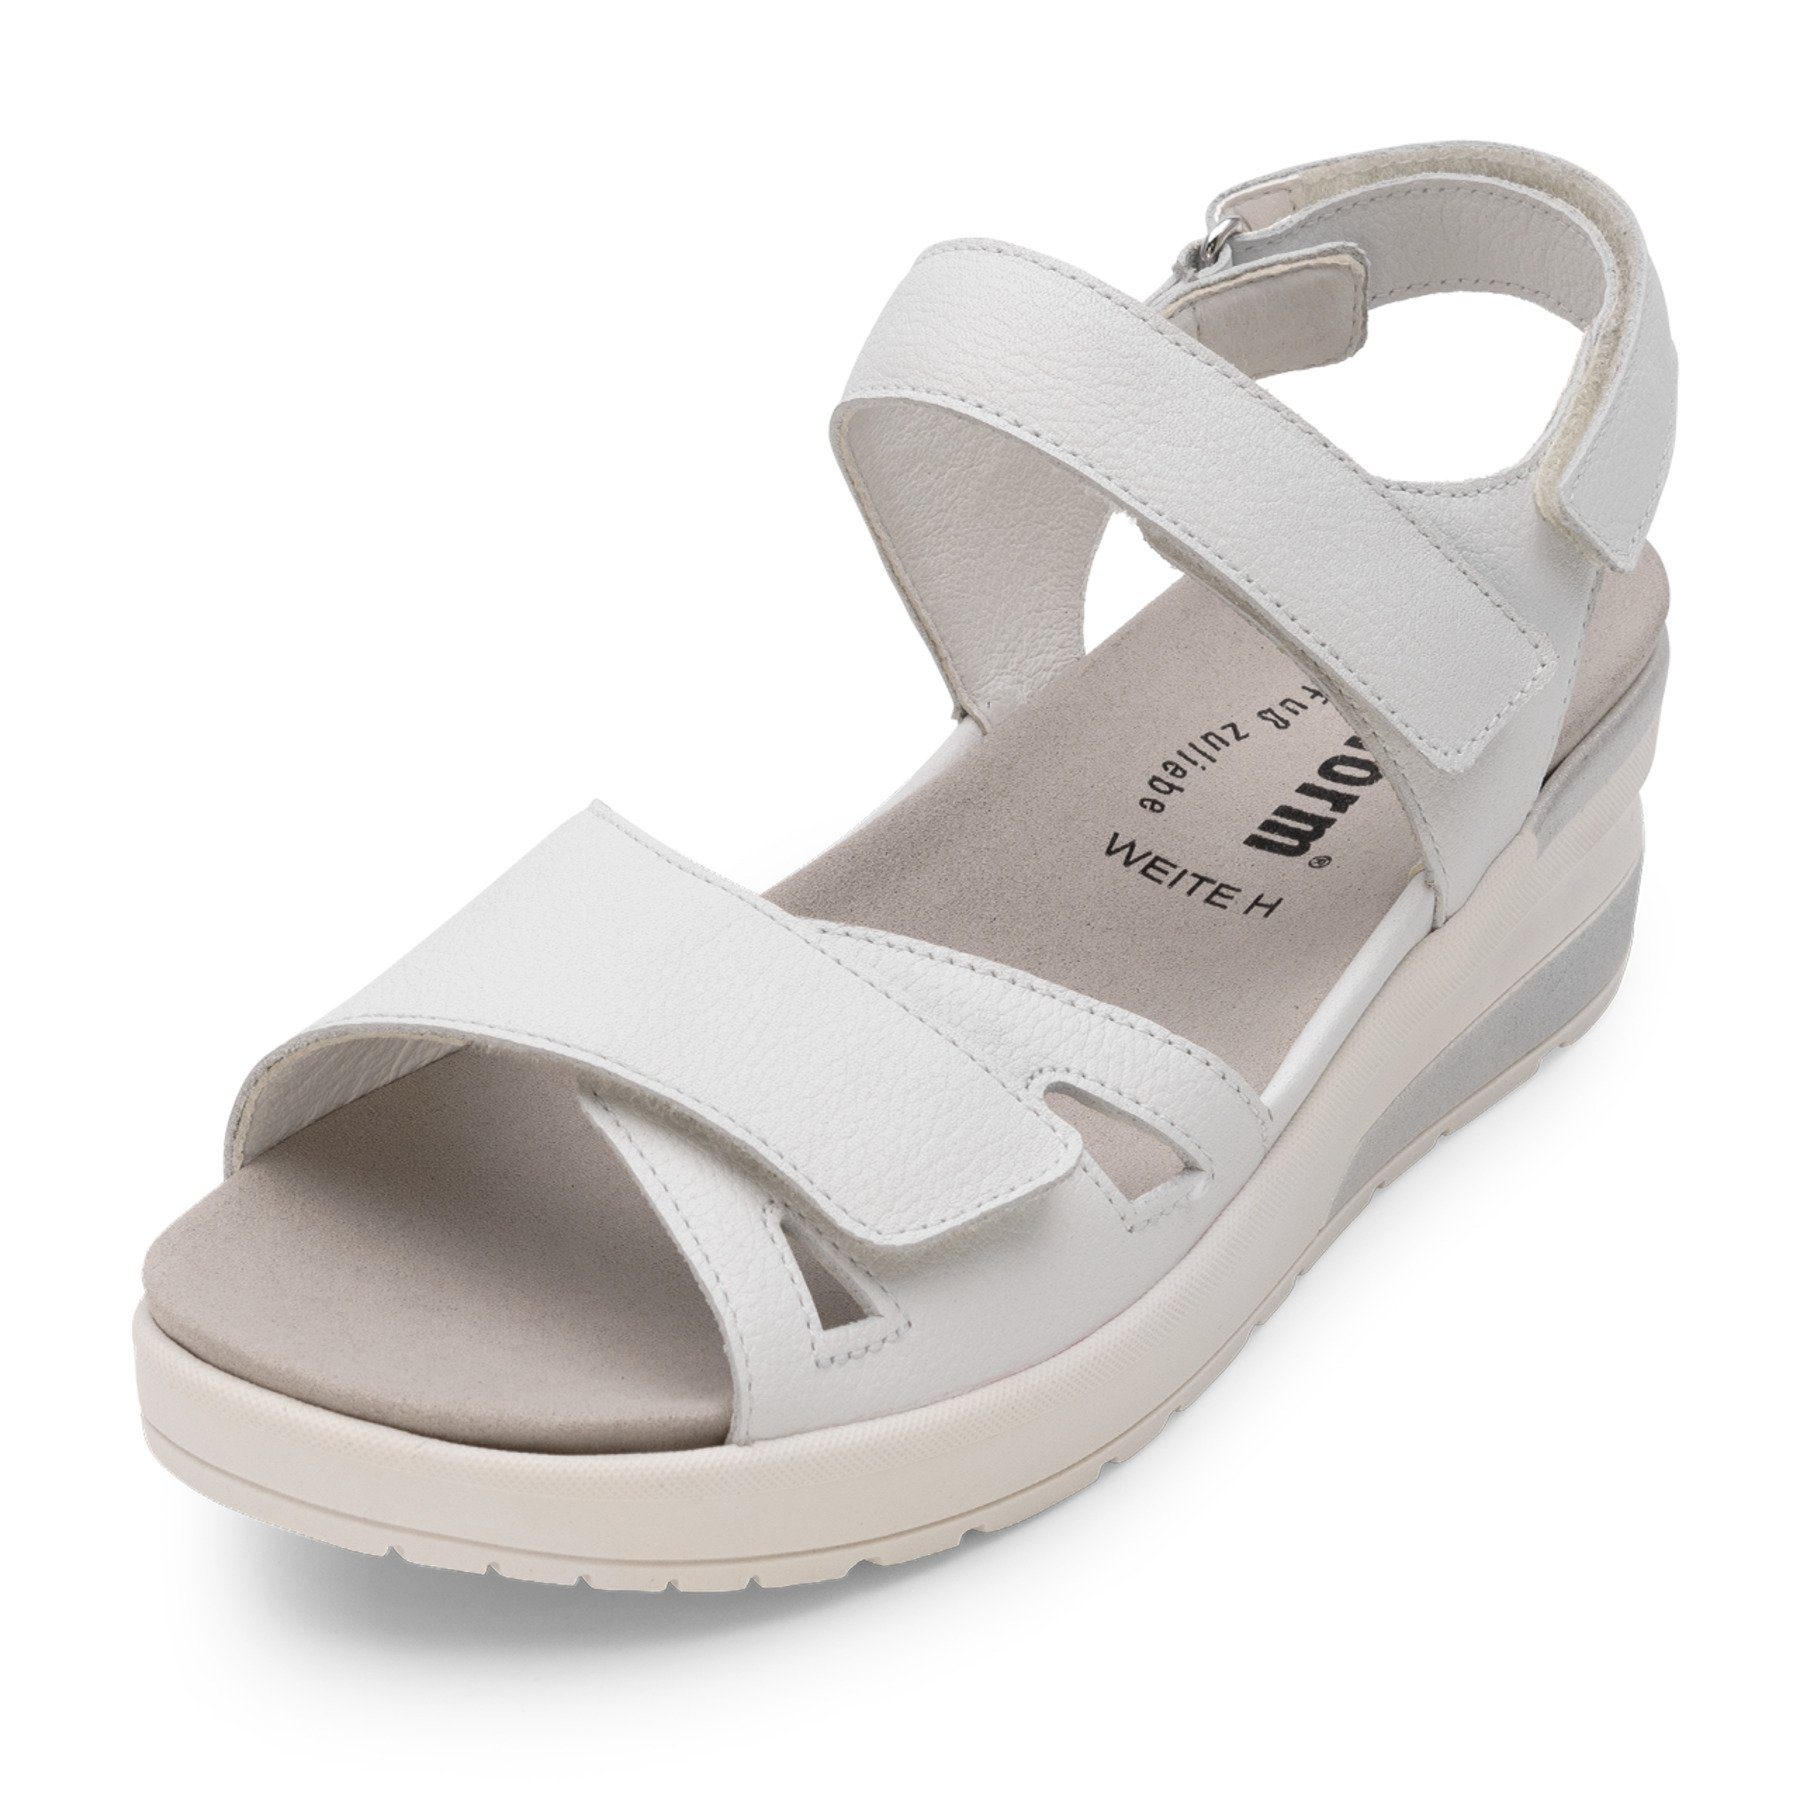 Sandalette weiß vitaform Sandalette Nappaleder Damenschuhe